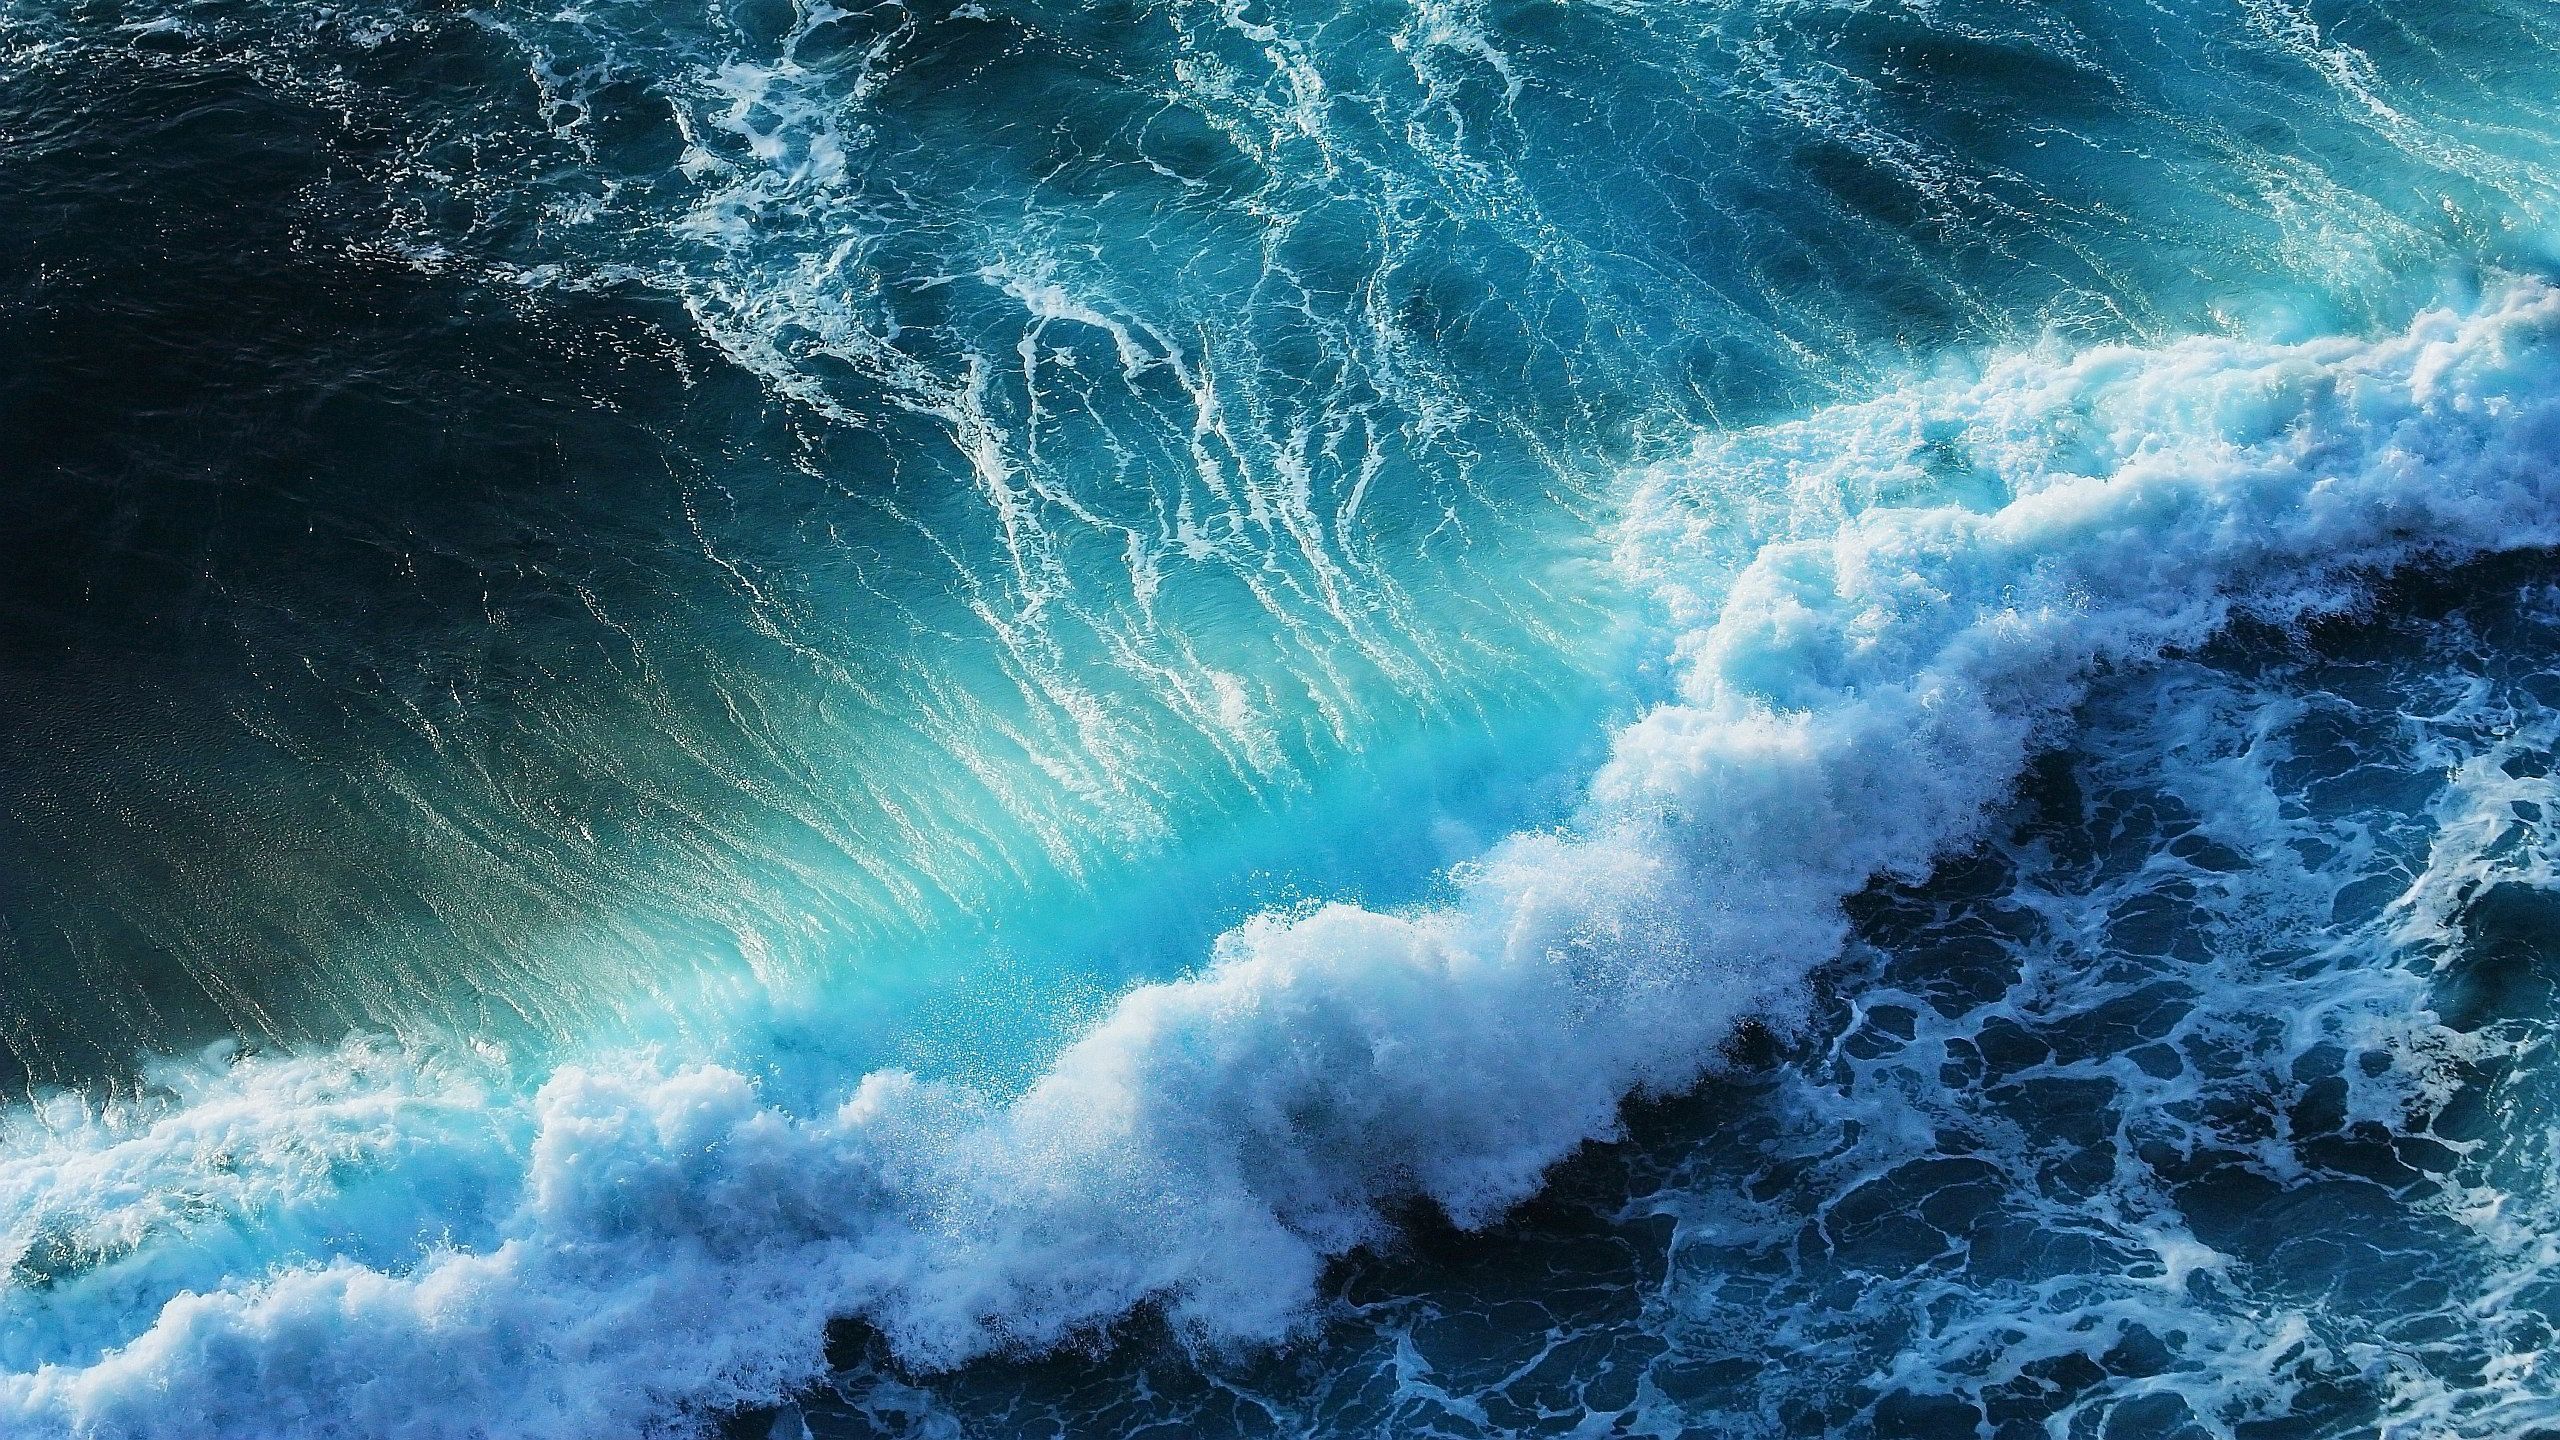 Sea wave Wallpaper. #RockxOnTour. Waves